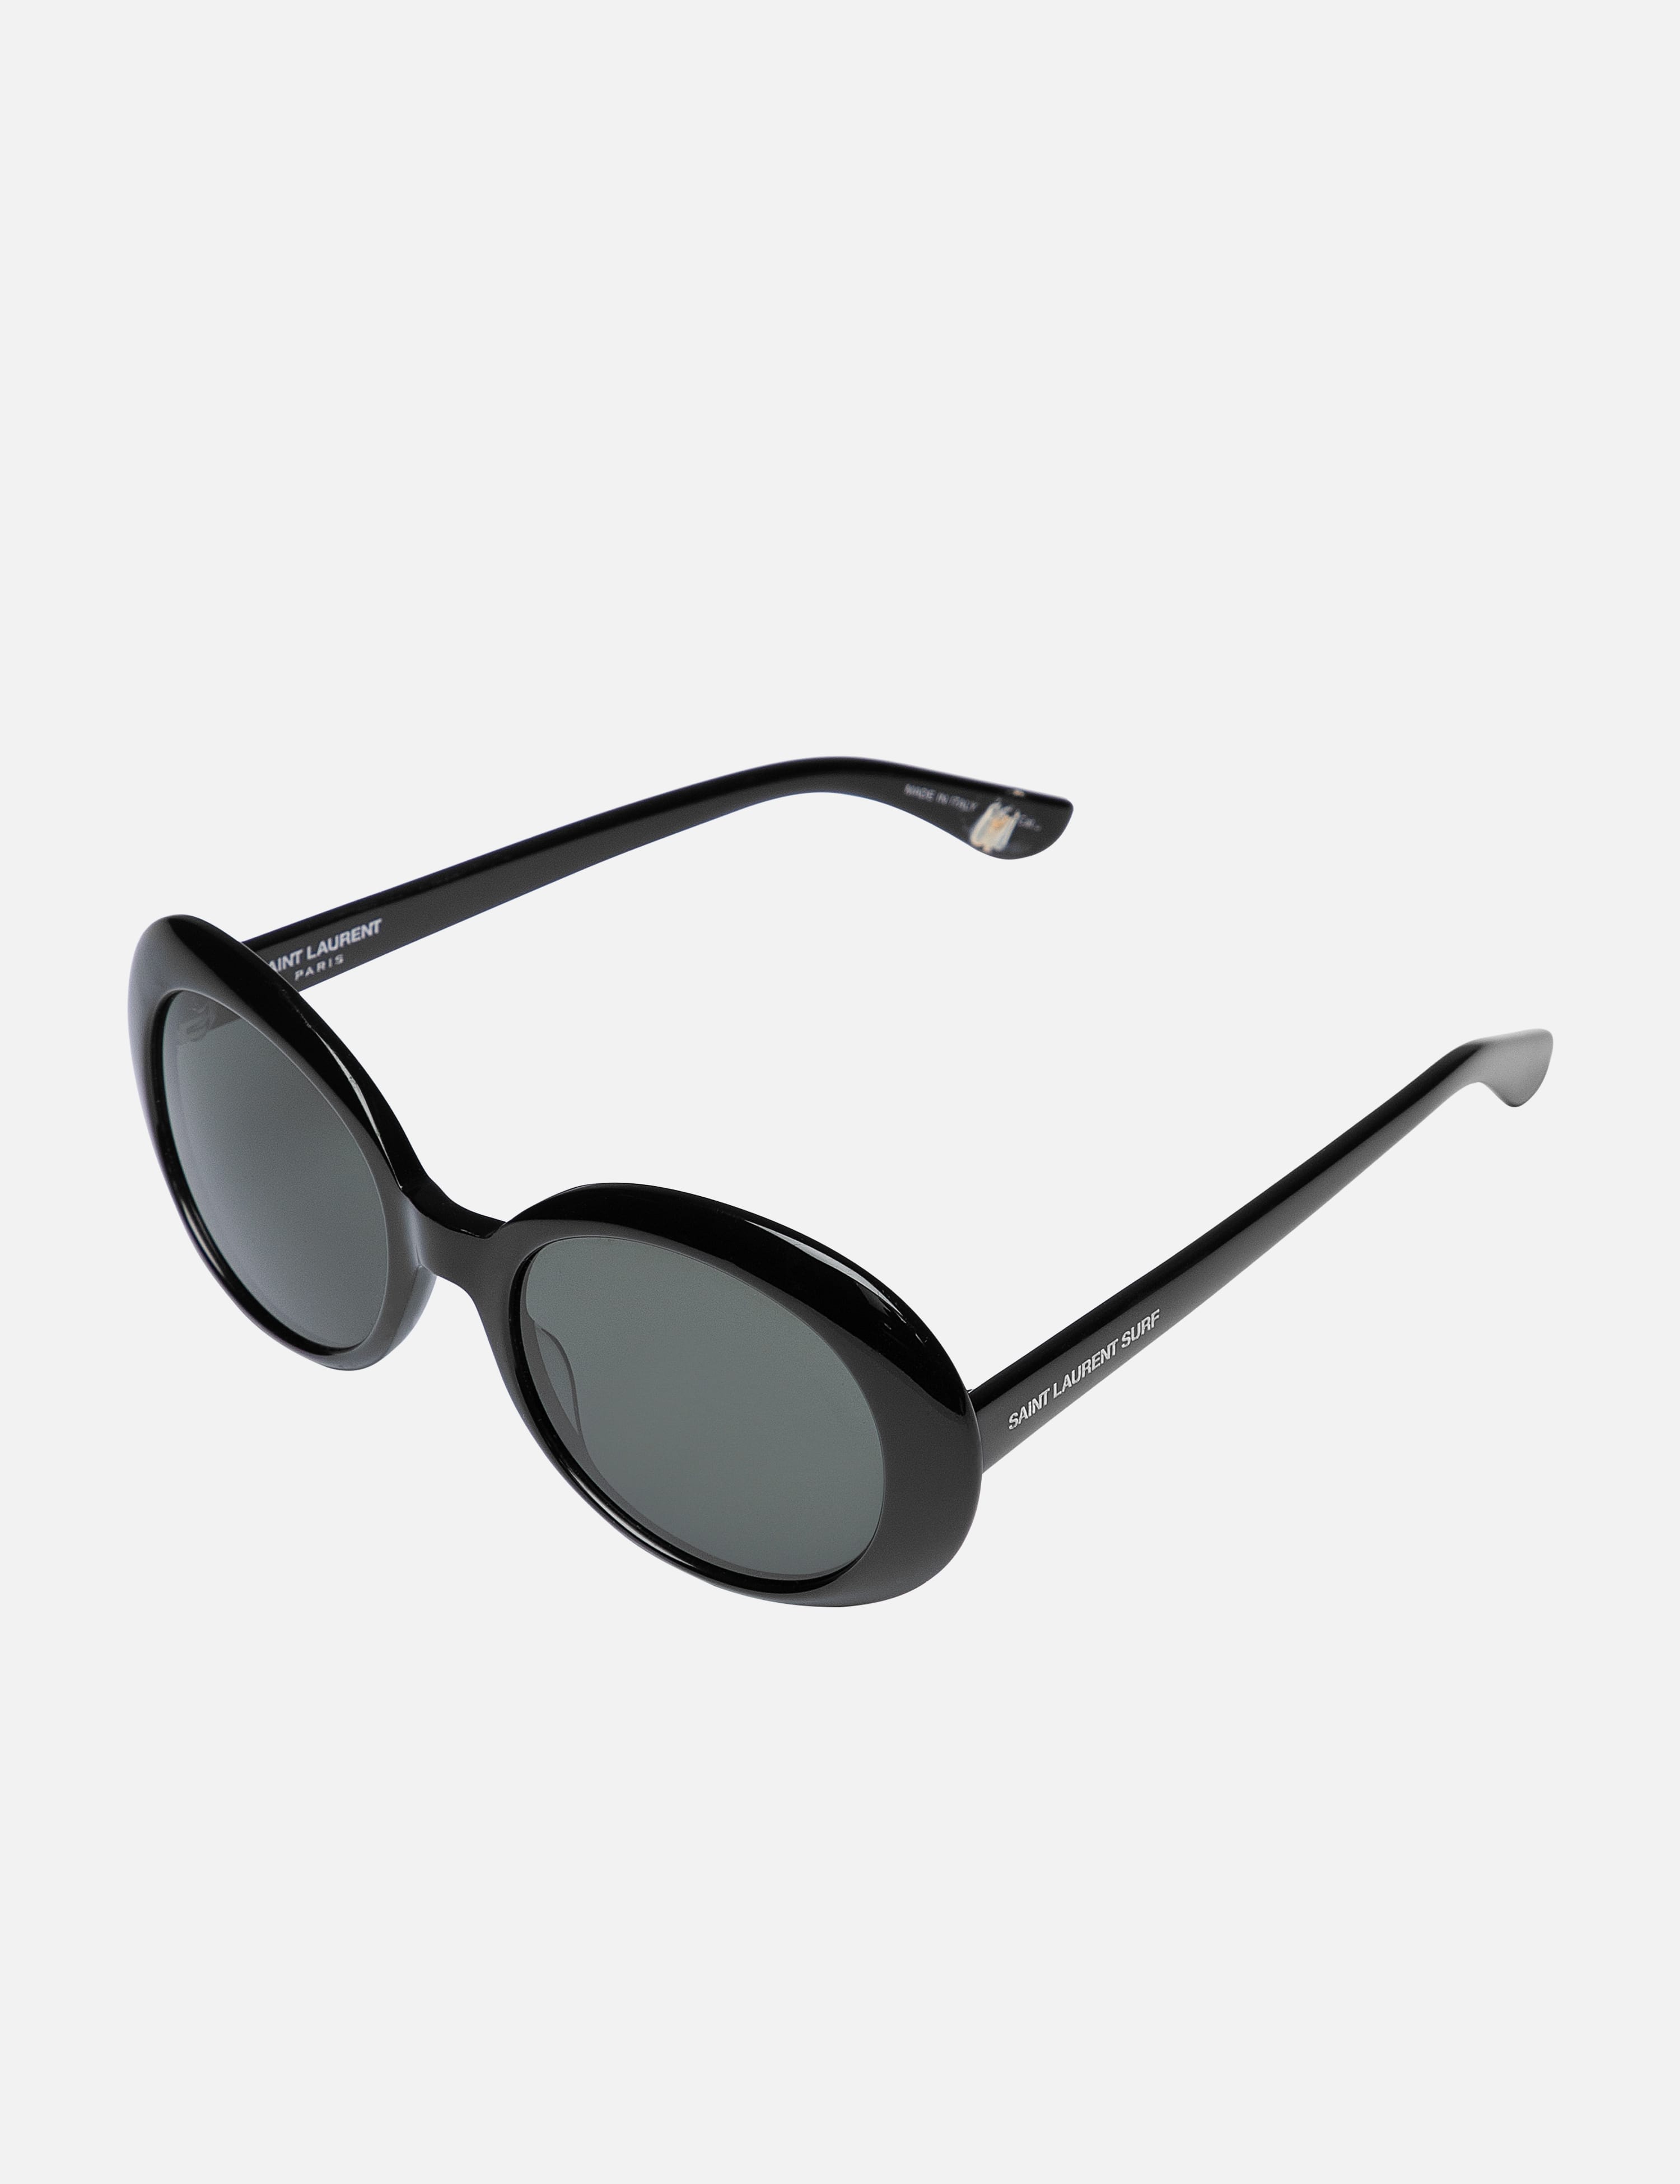 Saint Laurent SL M40 54 Grey & Black Shiny Sunglasses | Sunglass Hut USA